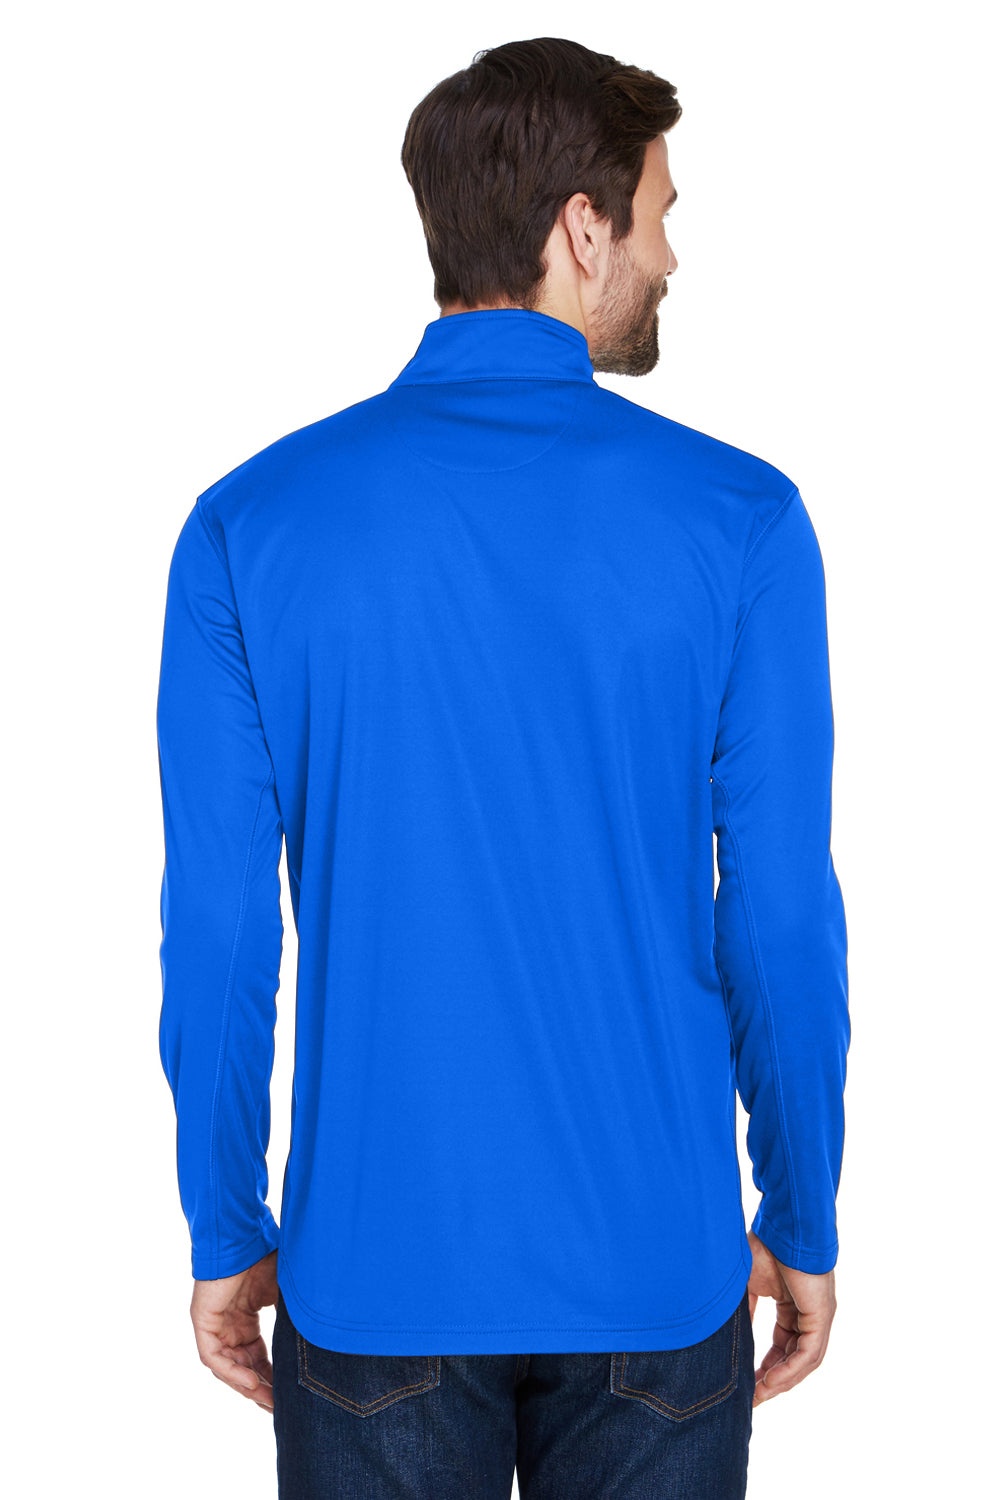 UltraClub 8230 Mens Cool & Dry Moisture Wicking 1/4 Zip Sweatshirt Royal Blue Back